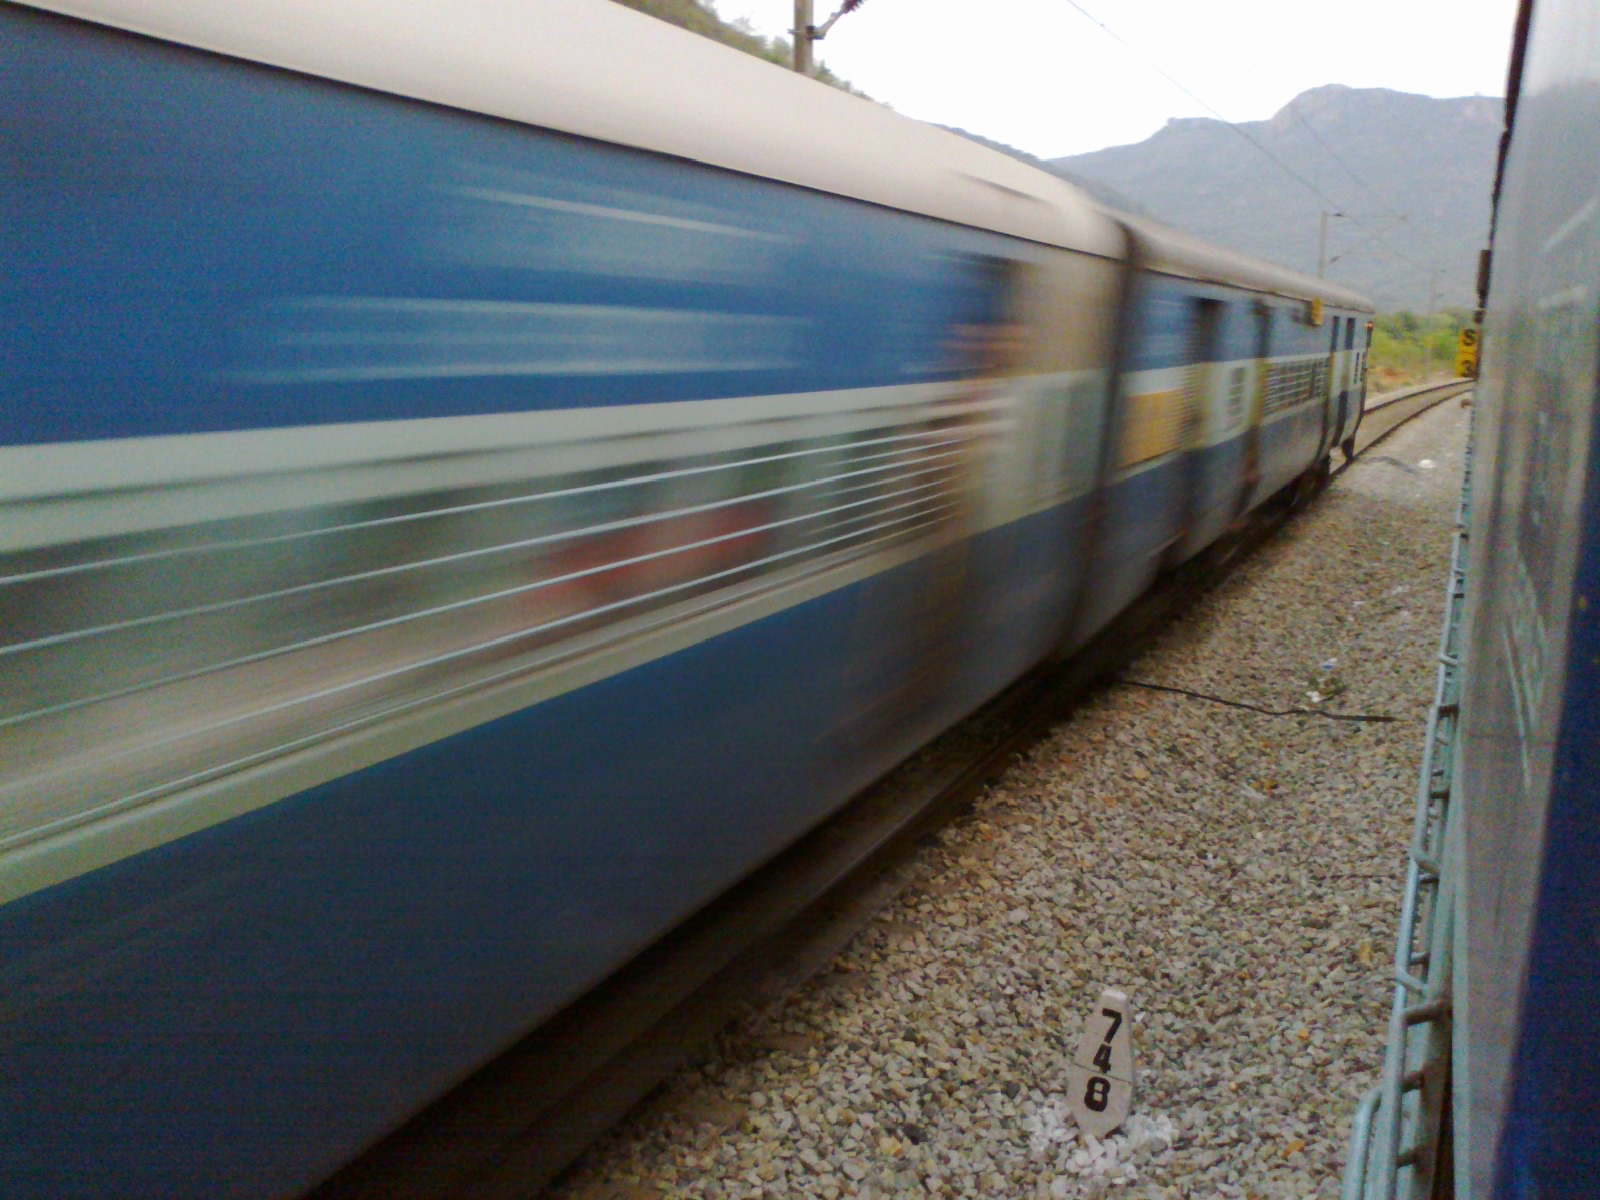 File:Fast Moving Train India.jpg - Wikimedia Commons